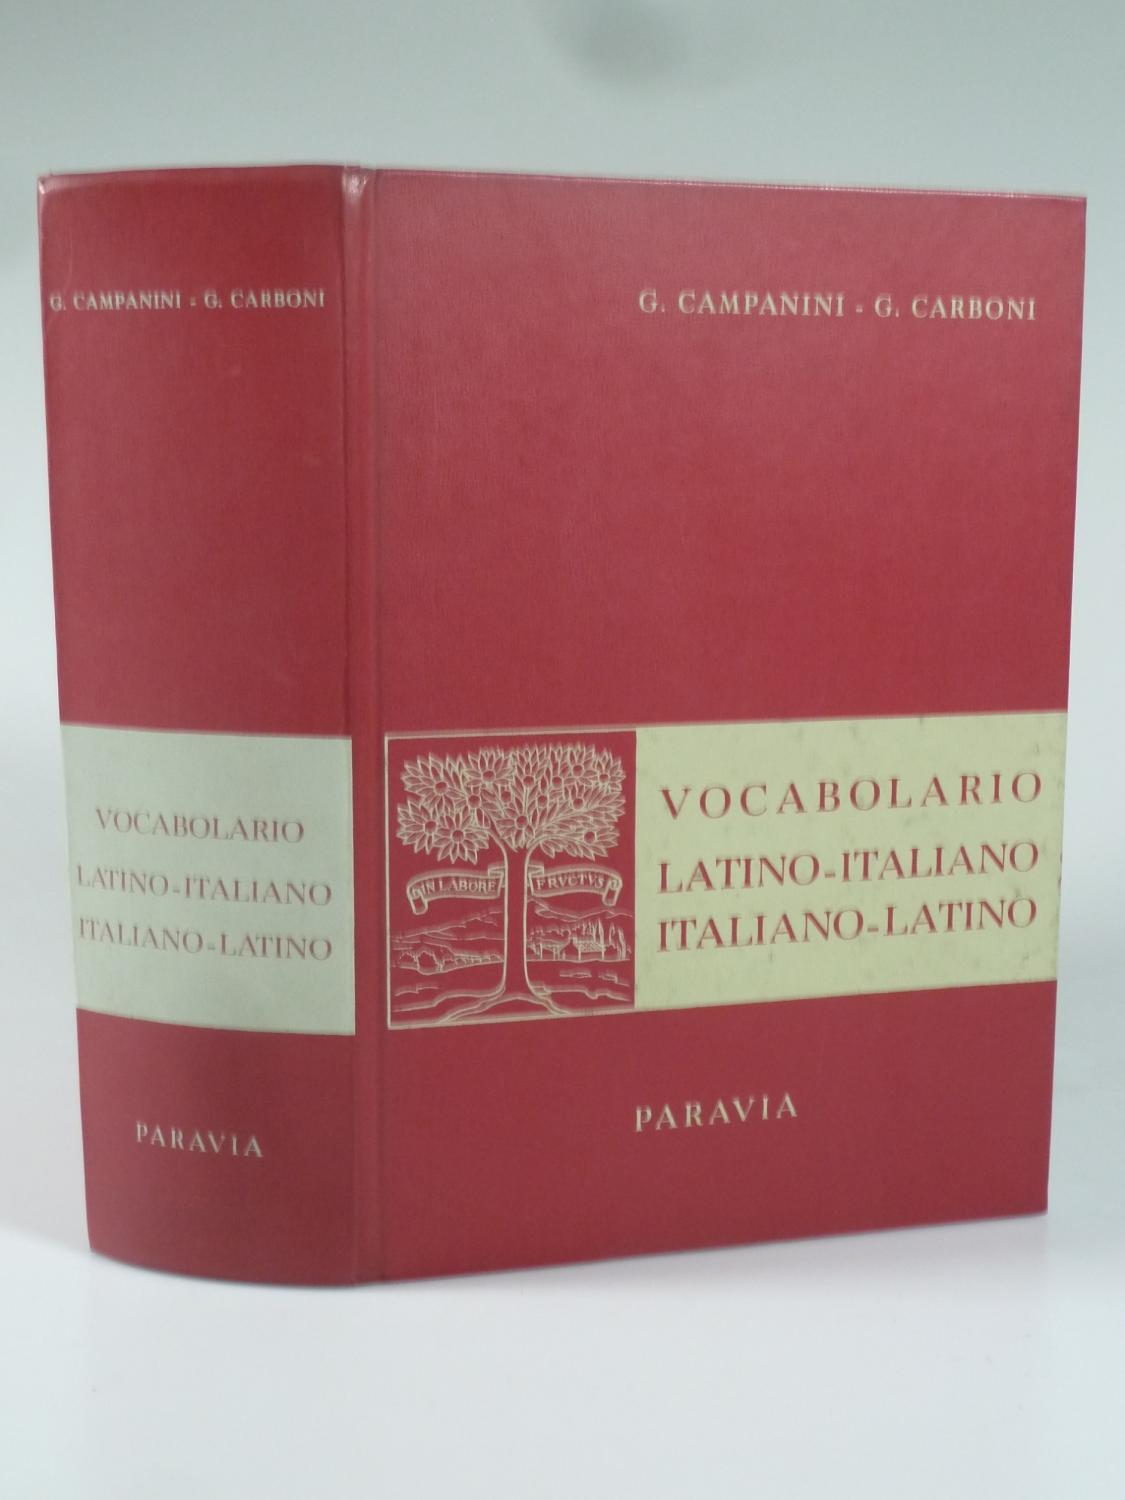 Vocabolario Latino-Italiano, Italiano-Latino.